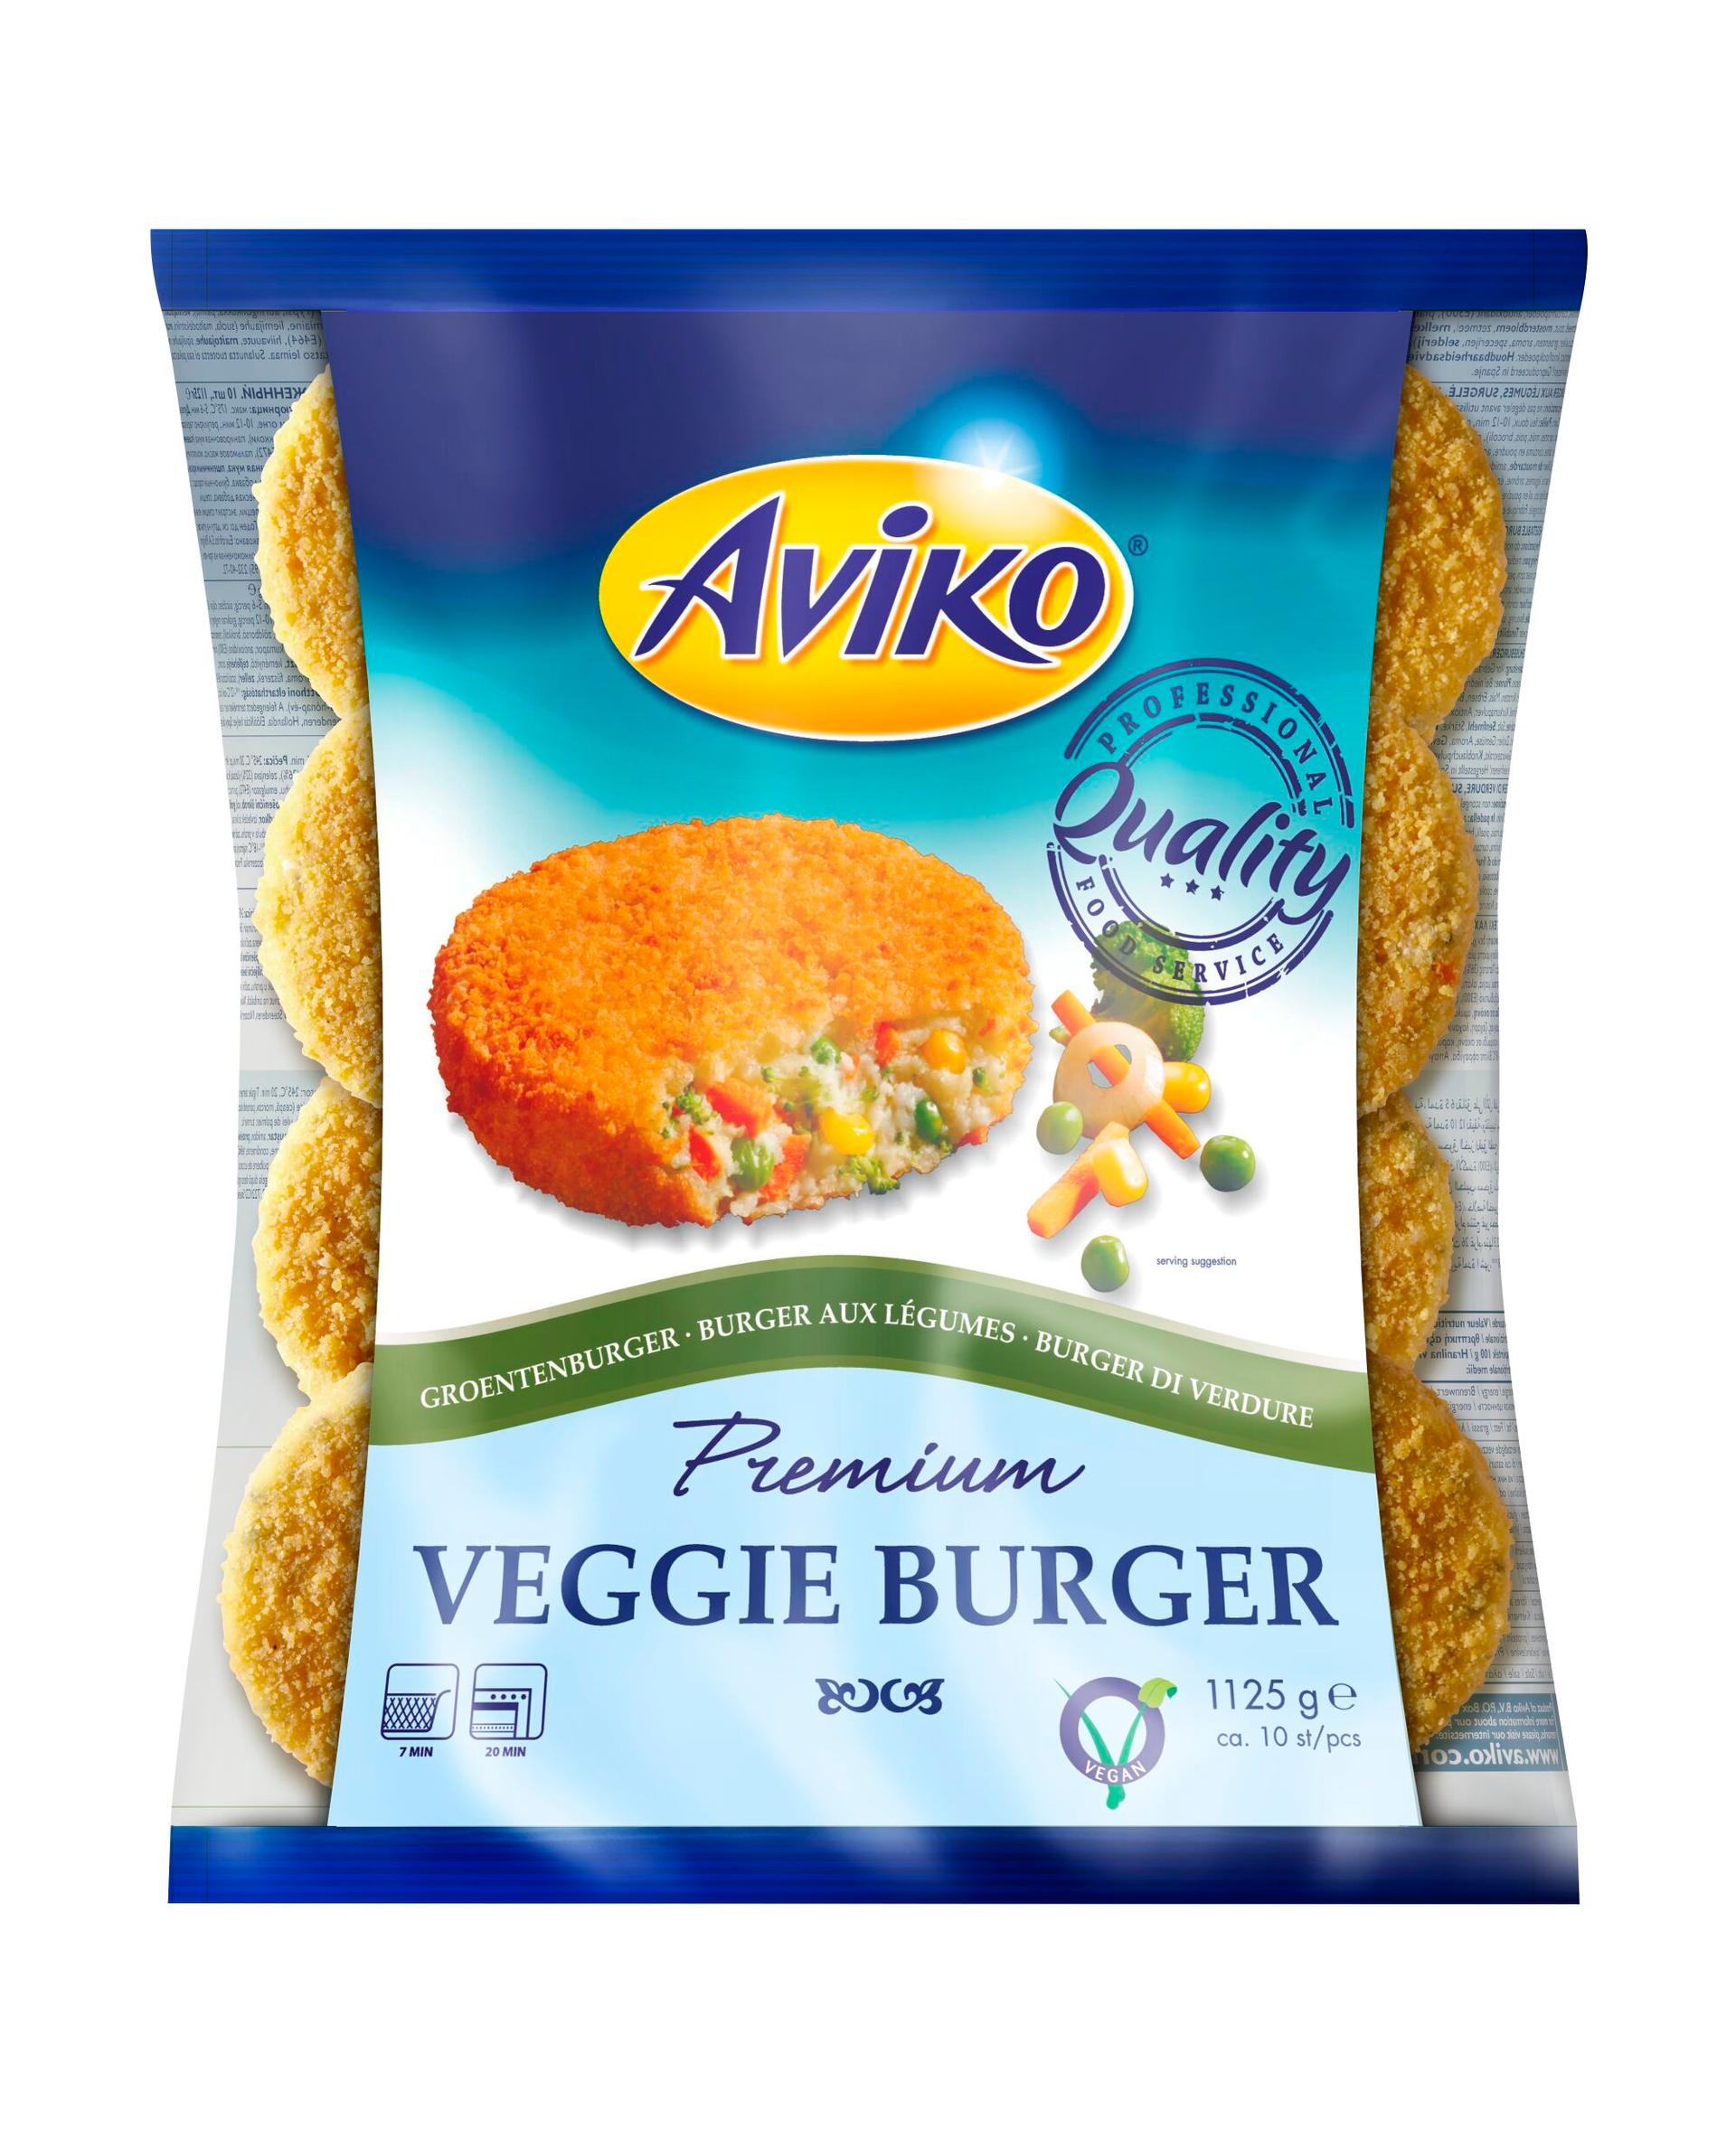 aviko_burger_vegetal